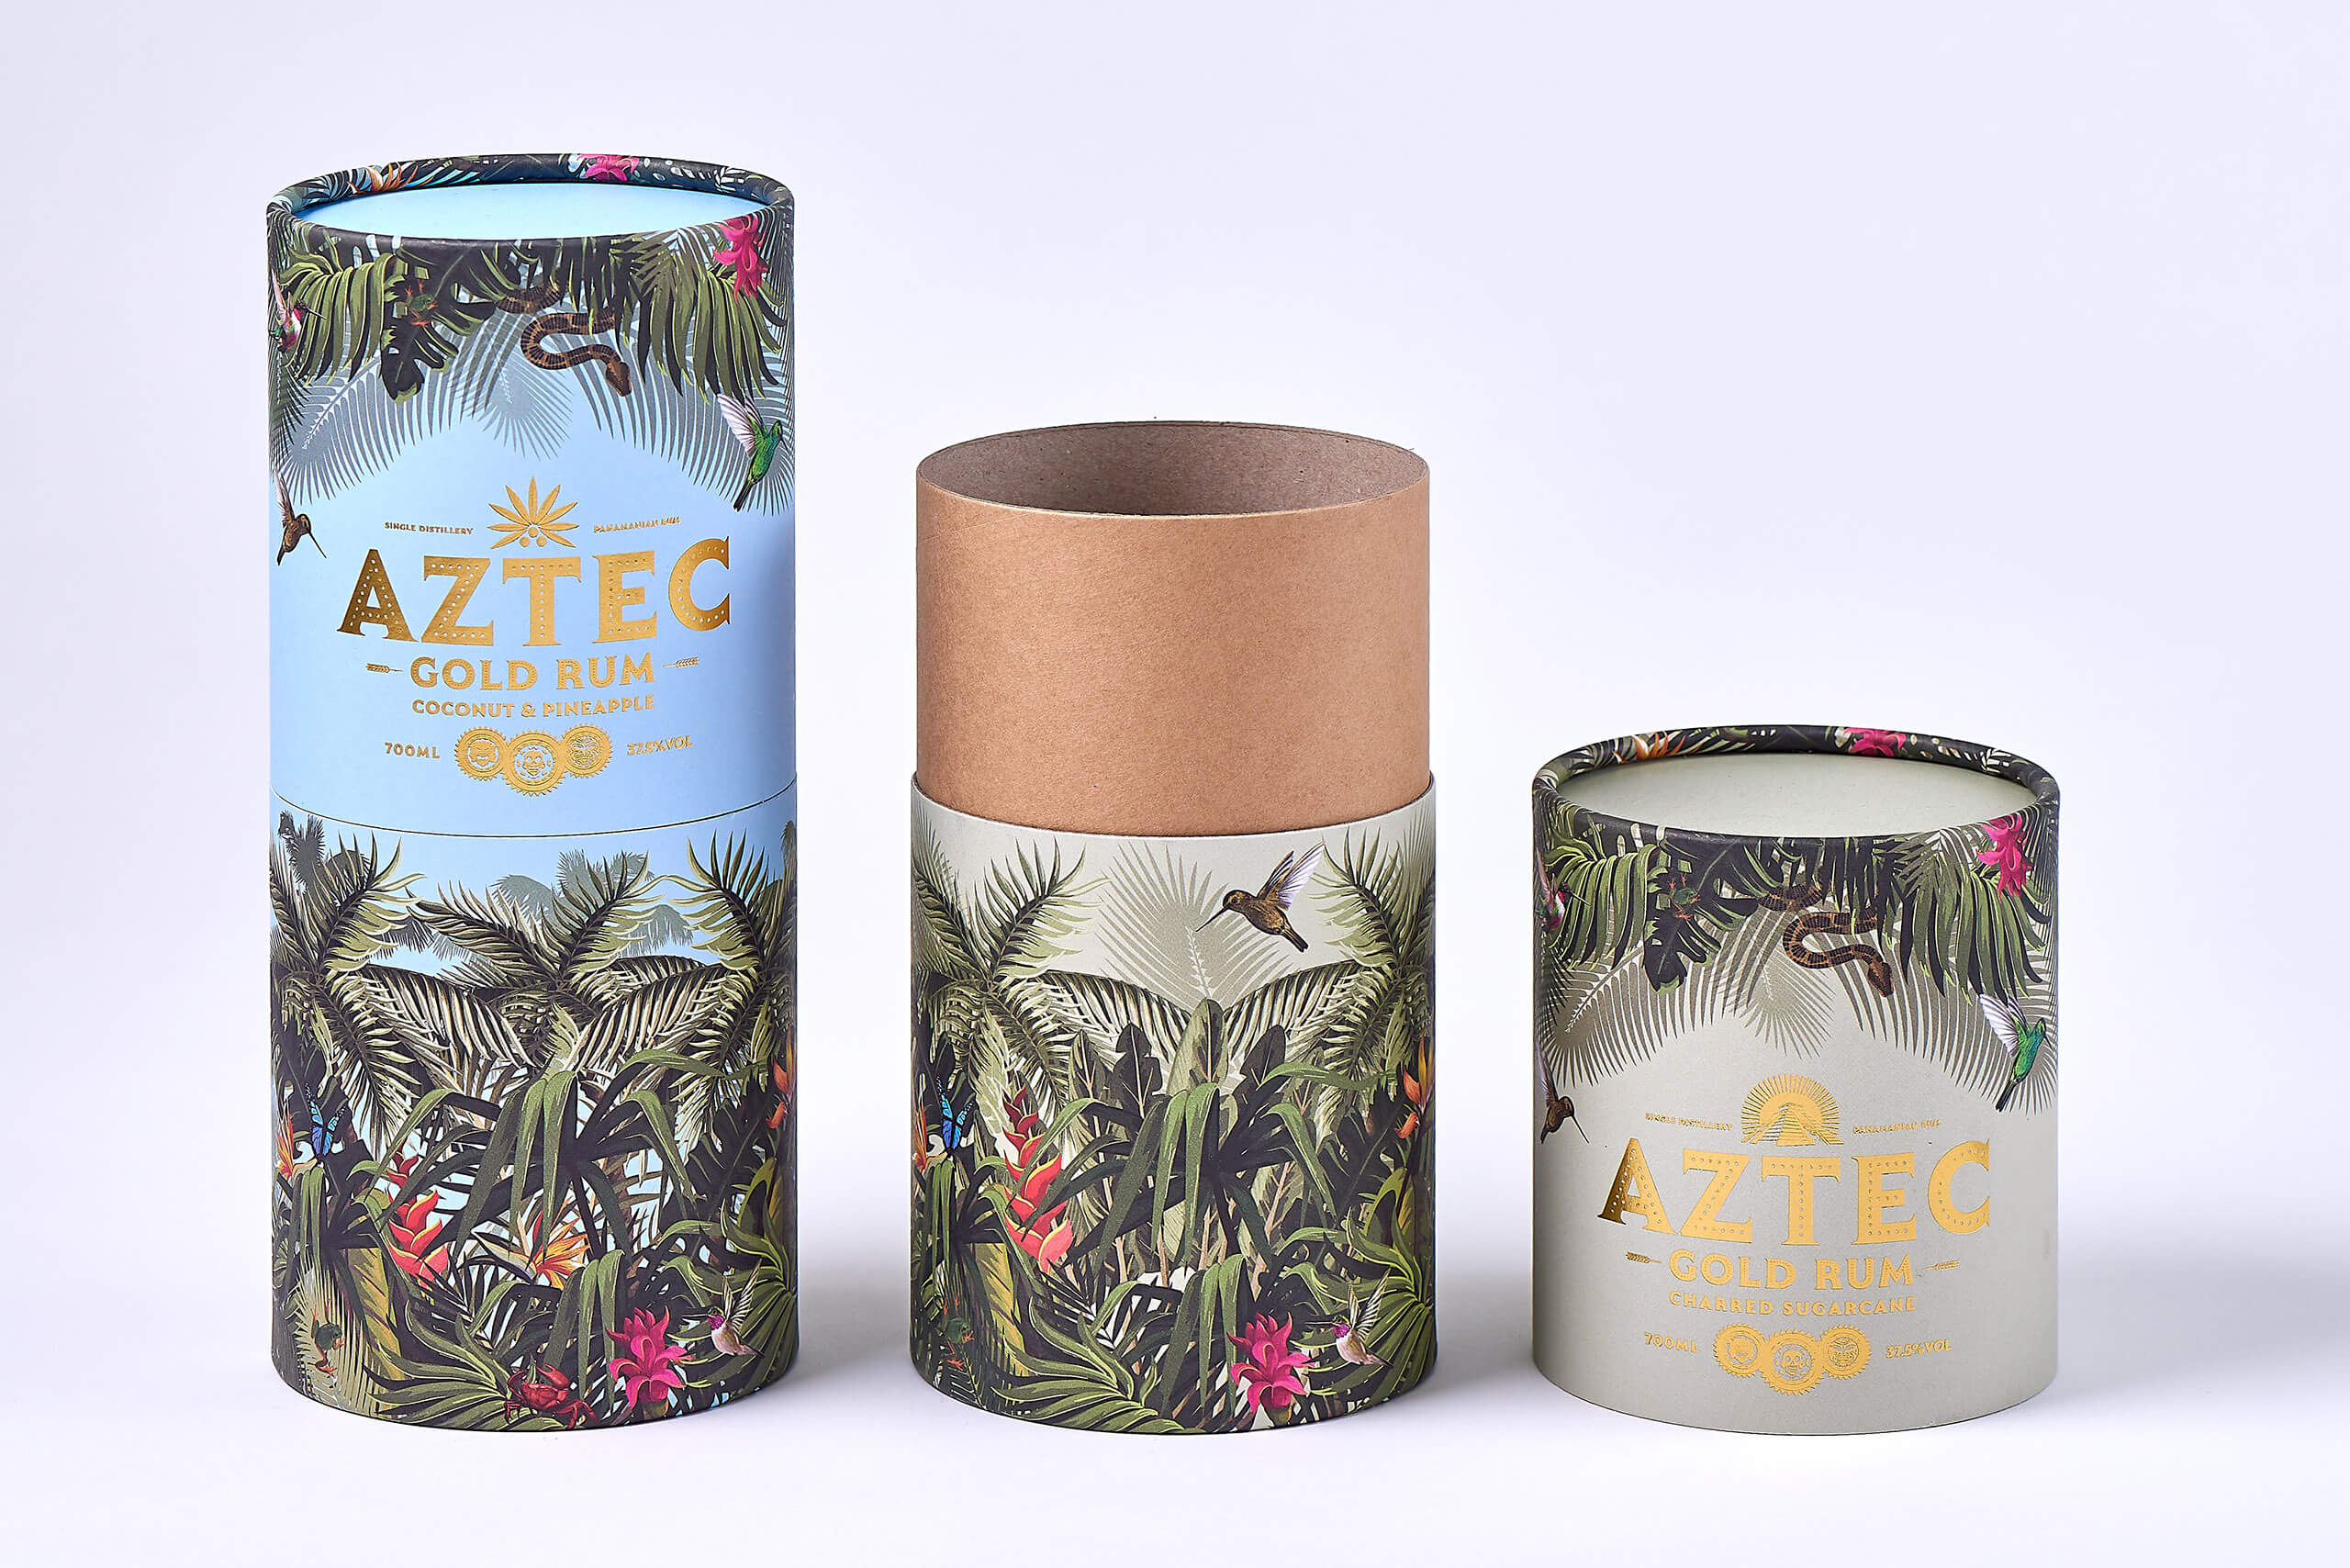 Aztec card tube packaging